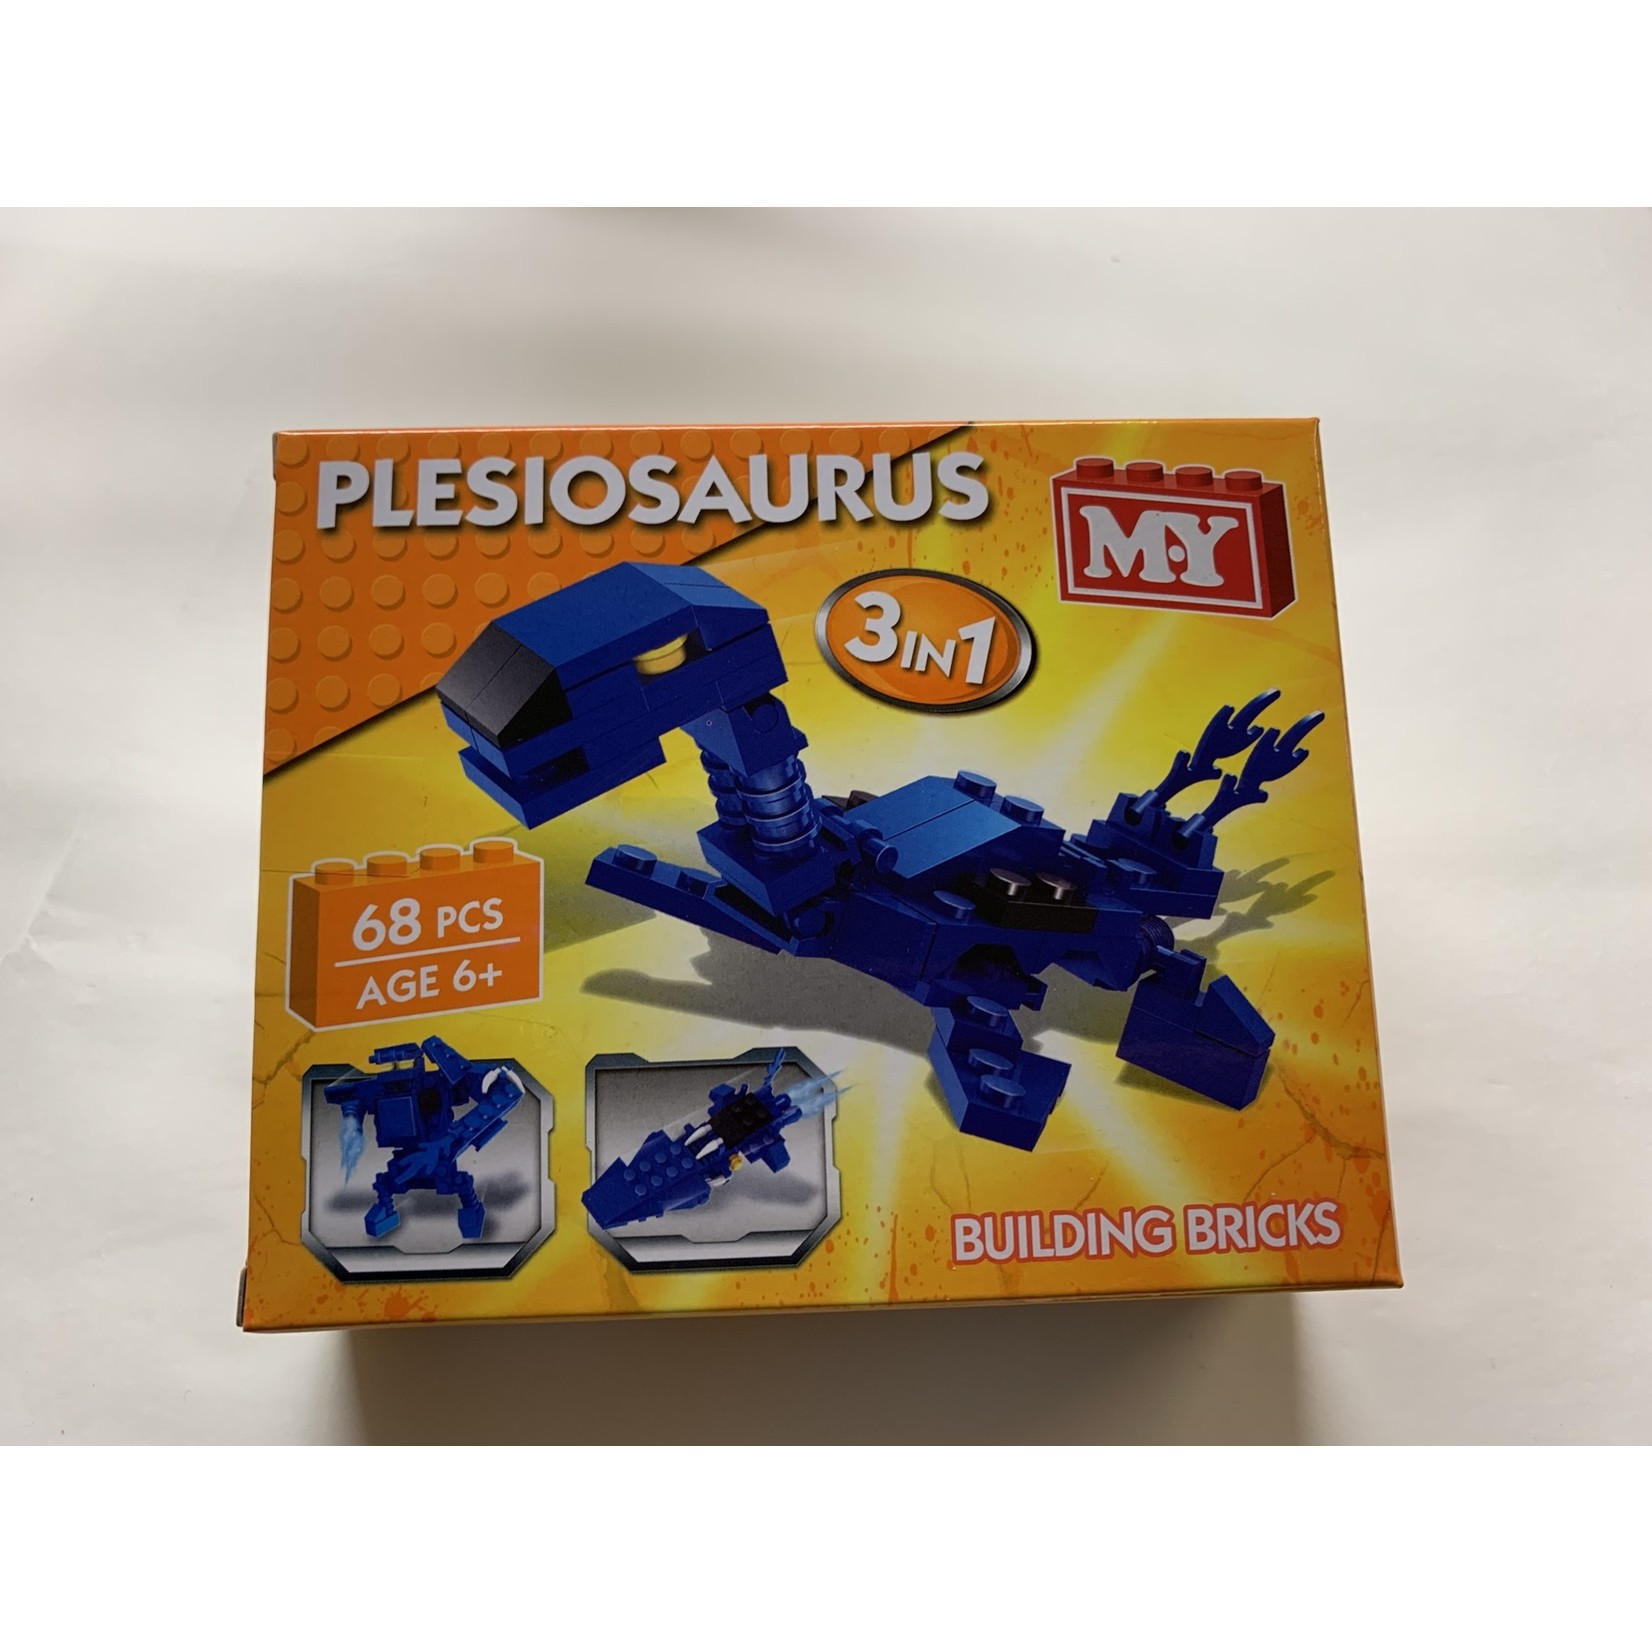 M.Y Dinosaur Plesiosaurus Building Bricks 3in1 (small)